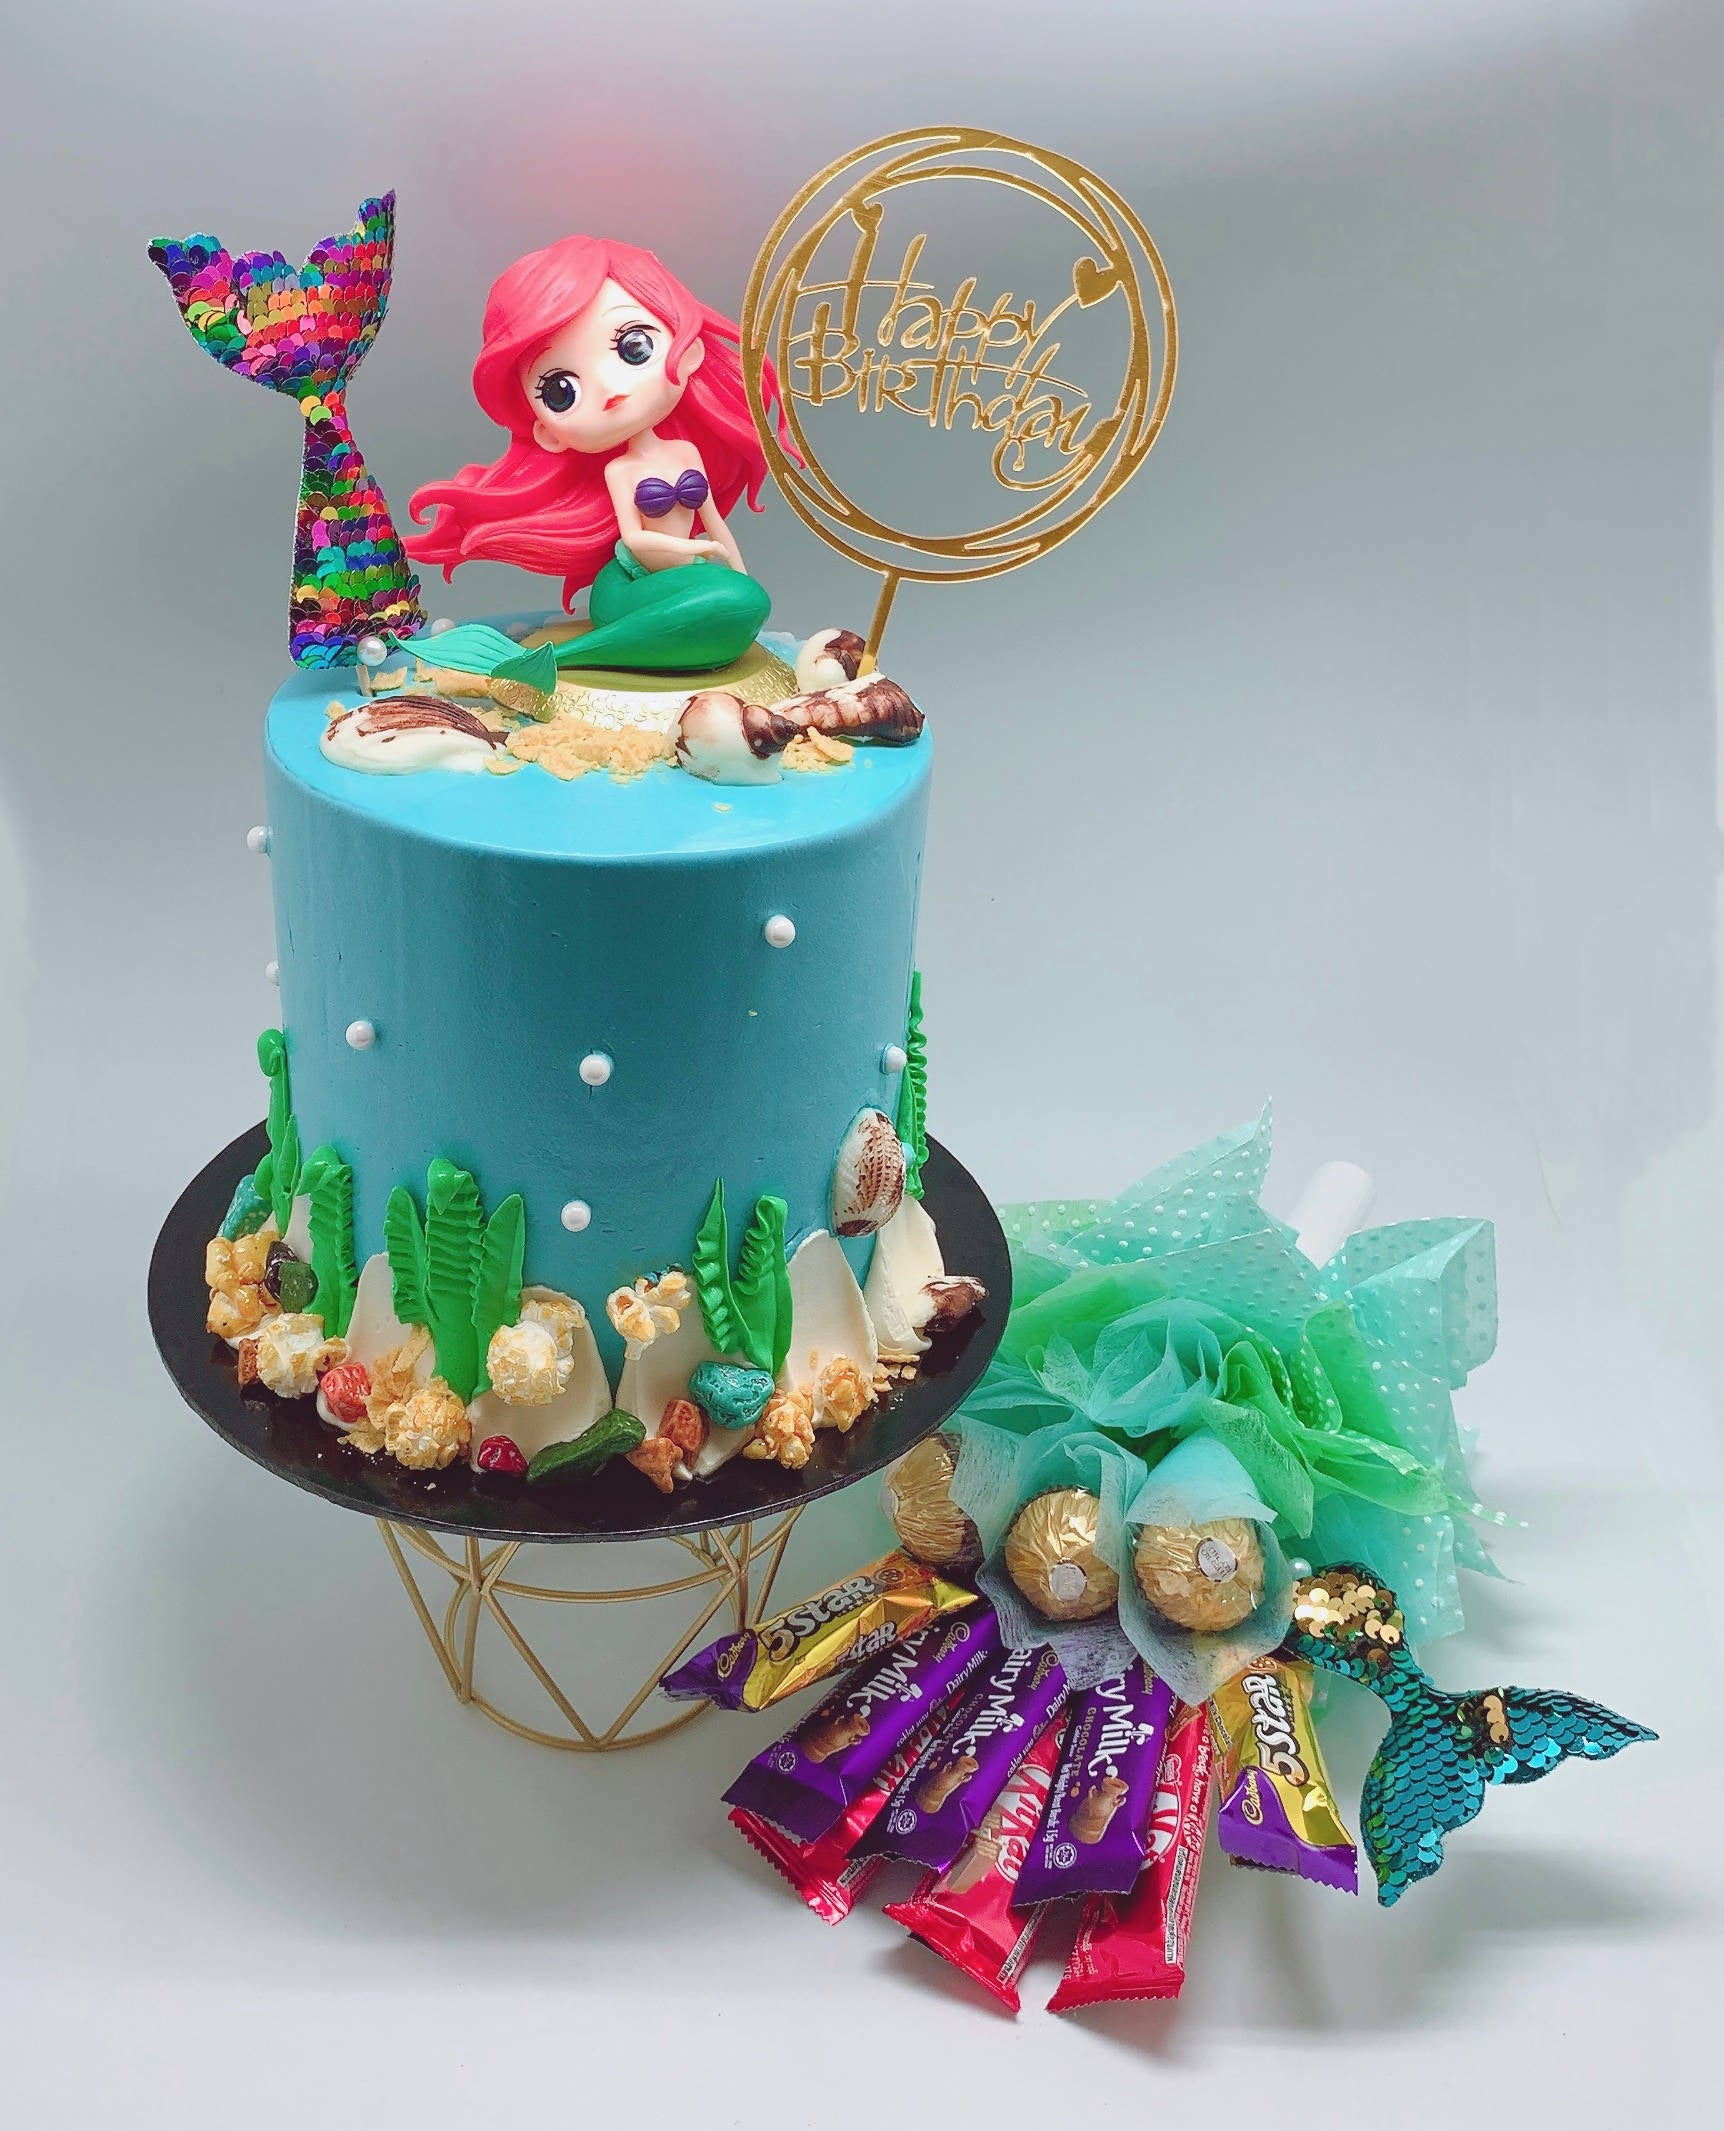 The Little Mermaid Photo Cake | bakehoney.com